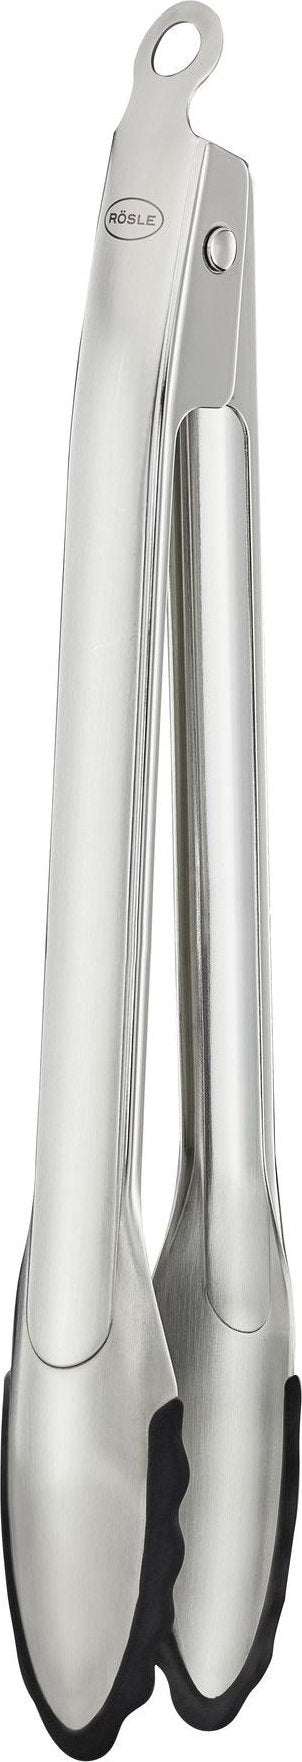 Rosle - 11.8" Locking Tongs with Silicone Edges (30 cm) - 12987